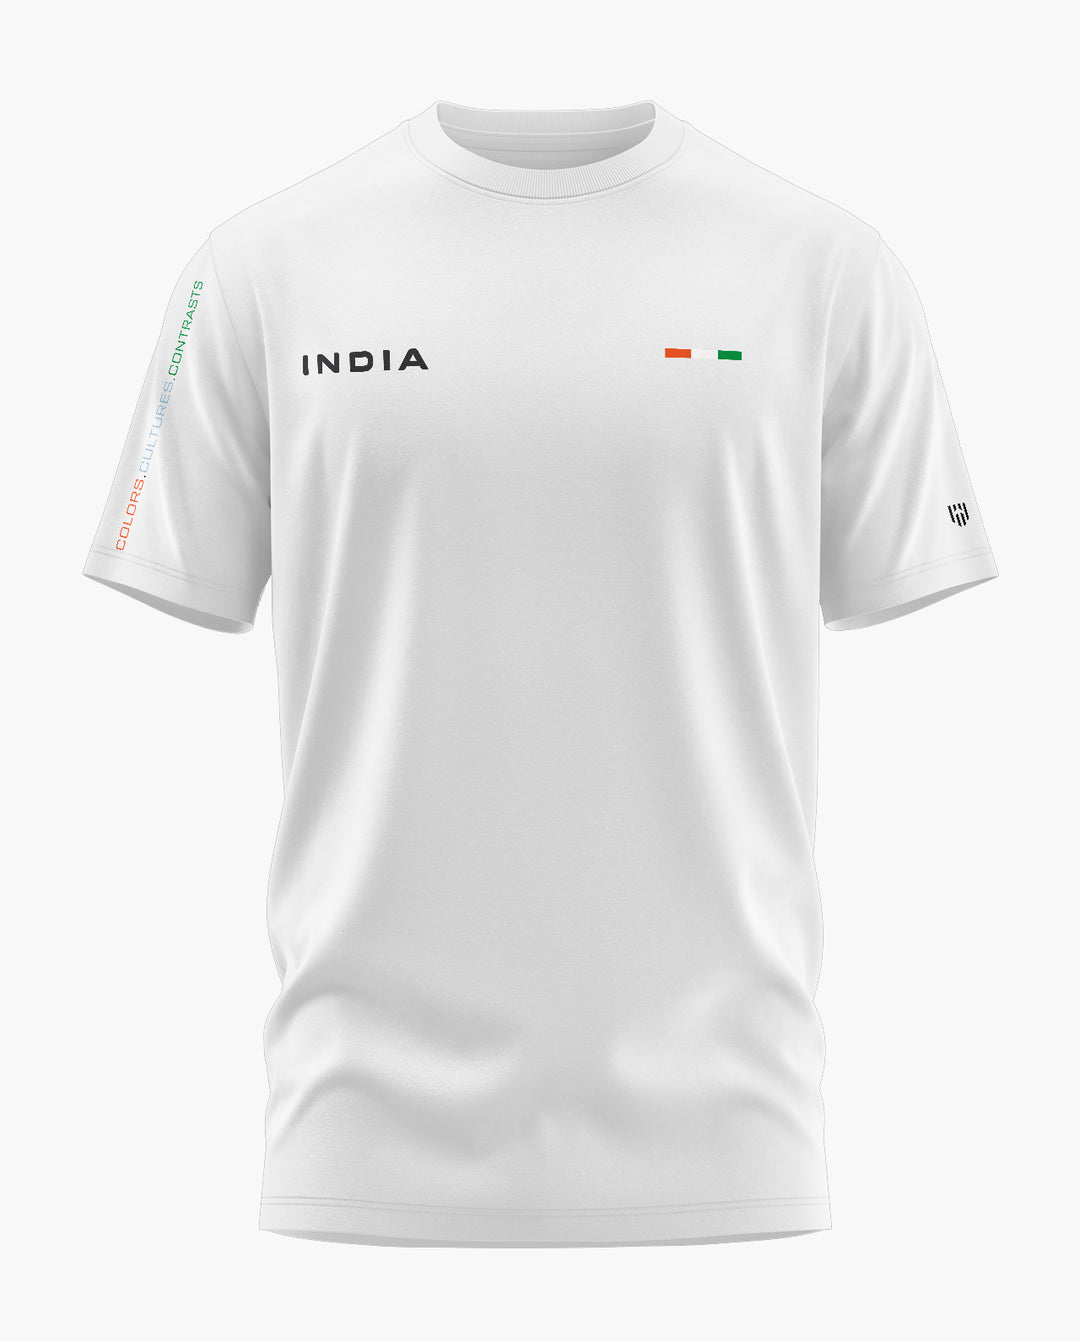 India Essence T-Shirt